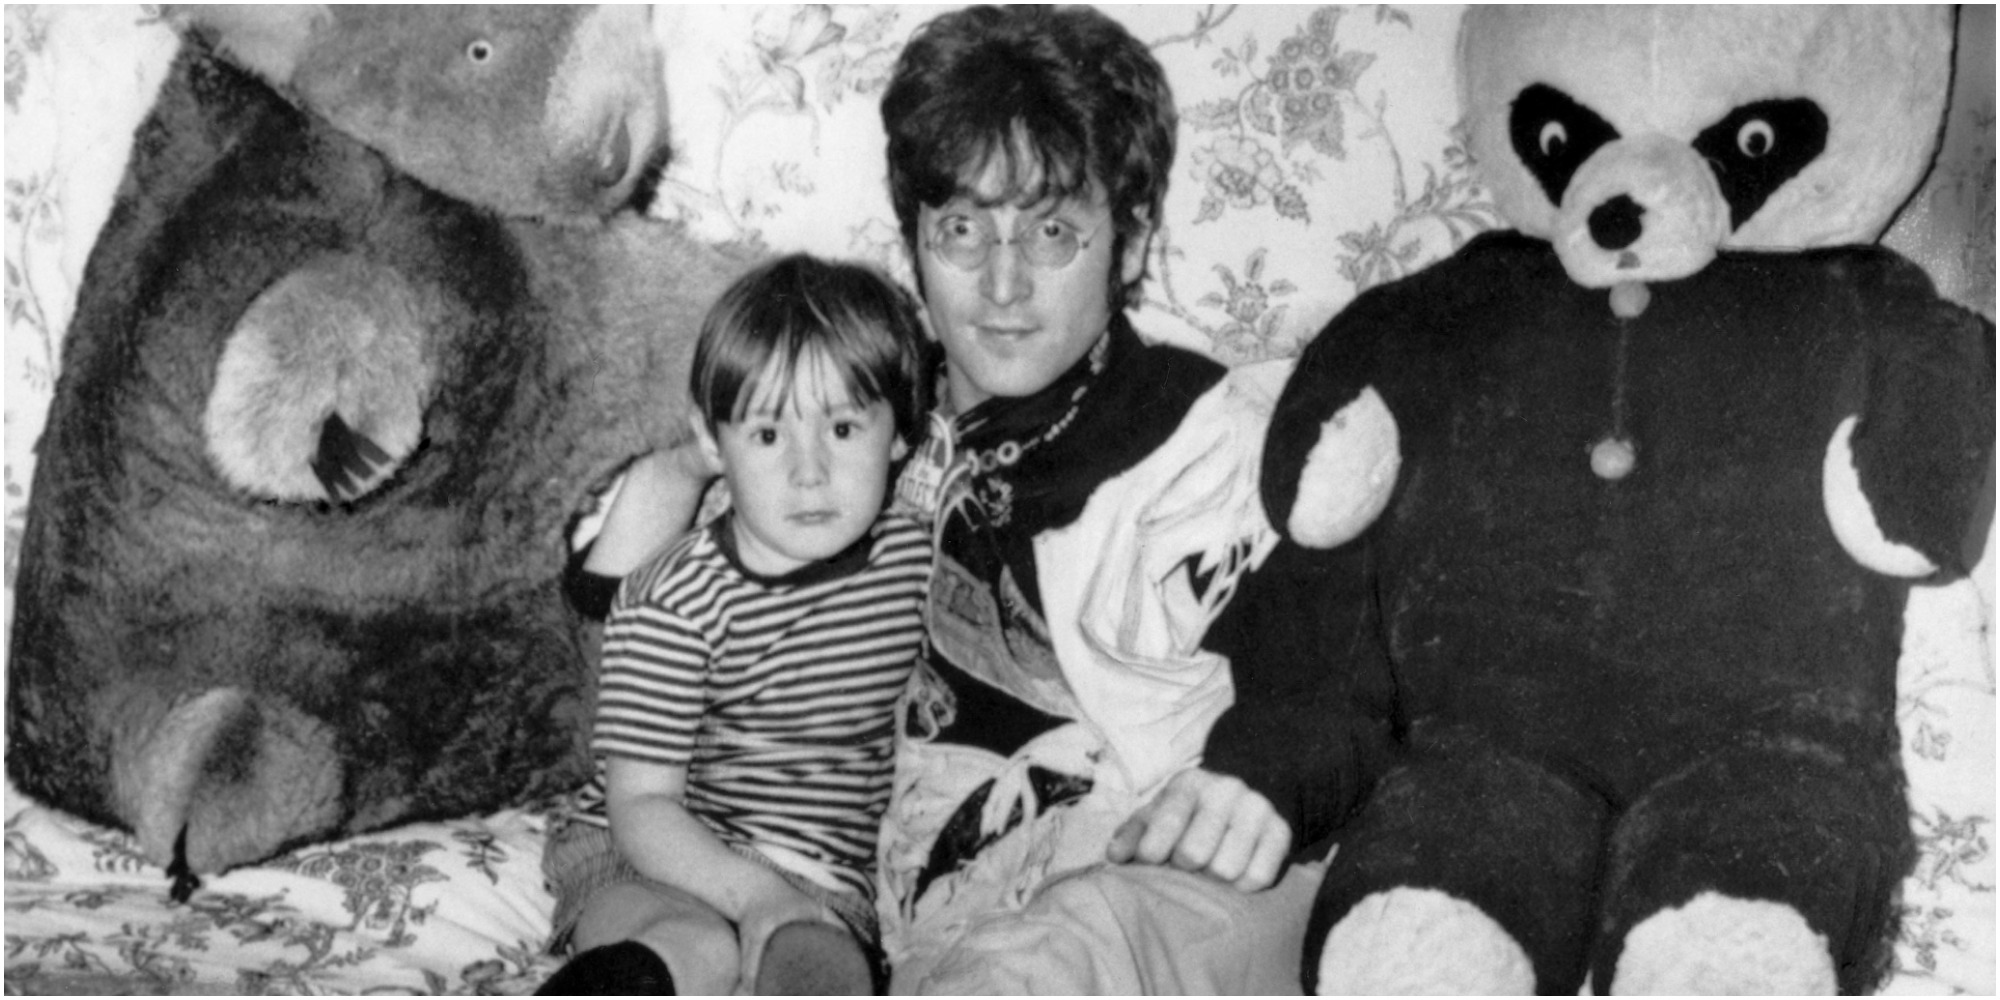 Julian and John Lennon pose for a photograph.